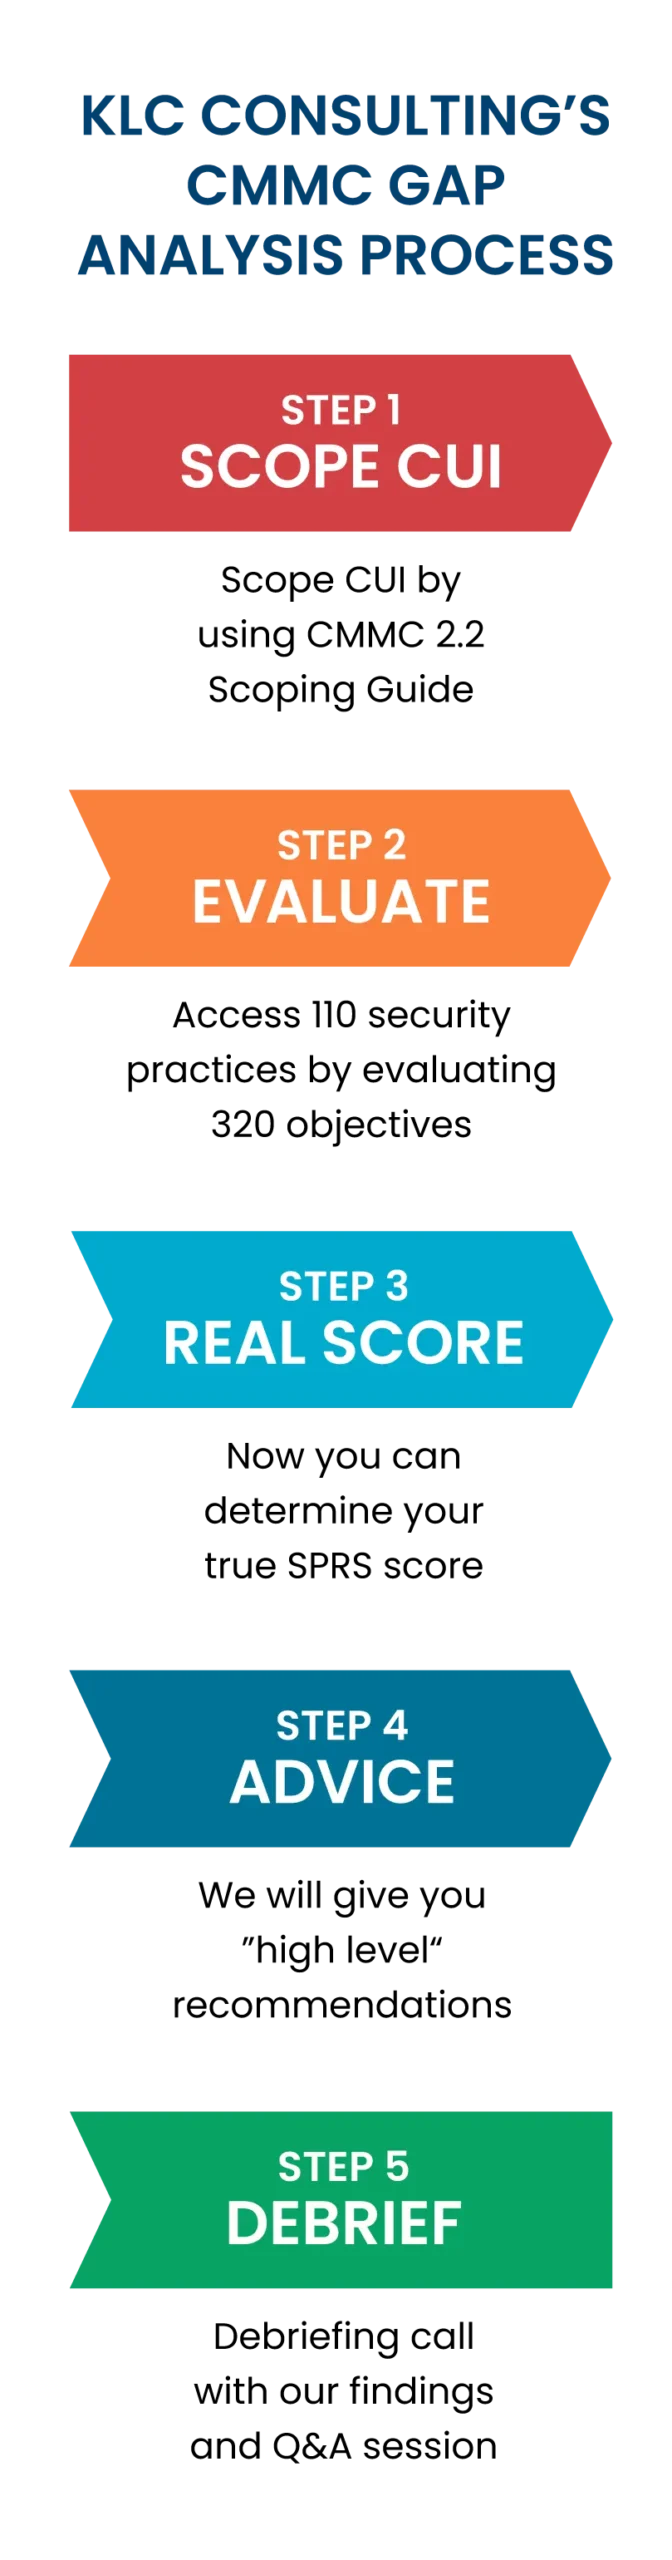 CMMC Gap Analysis Process, Step 1 Scope CUI, Step 2 Evaluate, Step 3 Real Score, Step 4 Advice, Step 5 Debrief